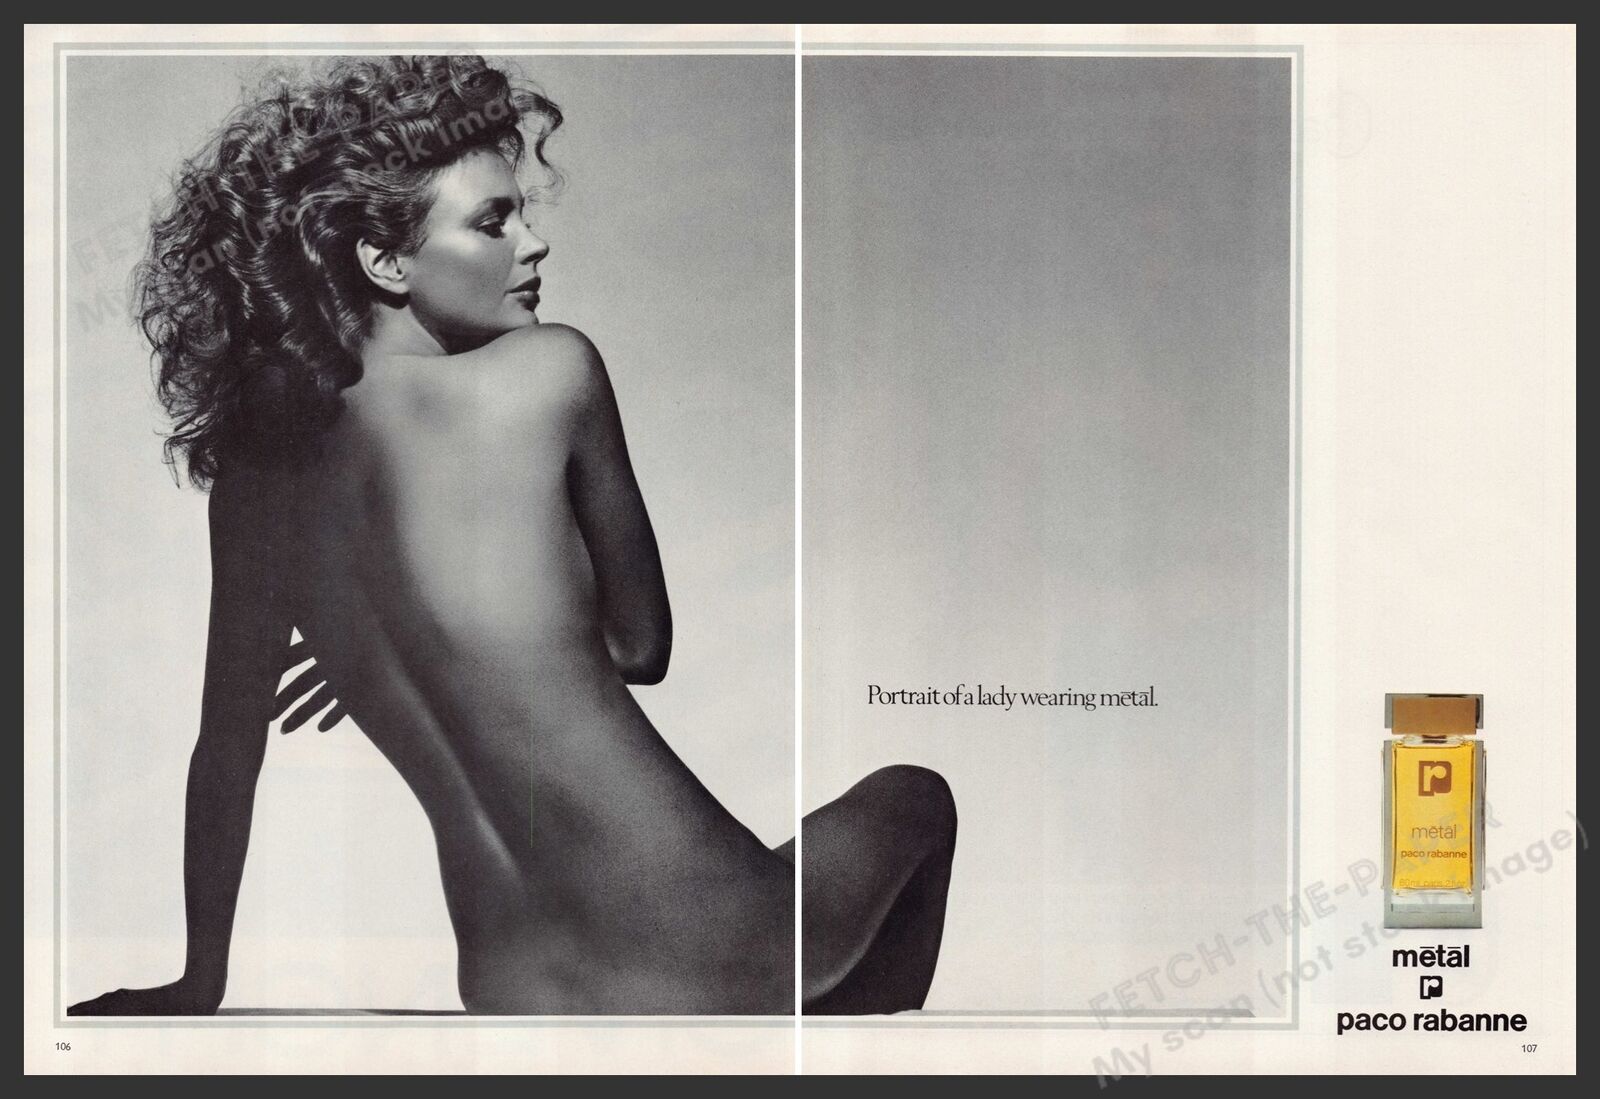 Paco Rabanne Metal Fragrance Portrait 1980s Print Advertisement (2 pages) 1982